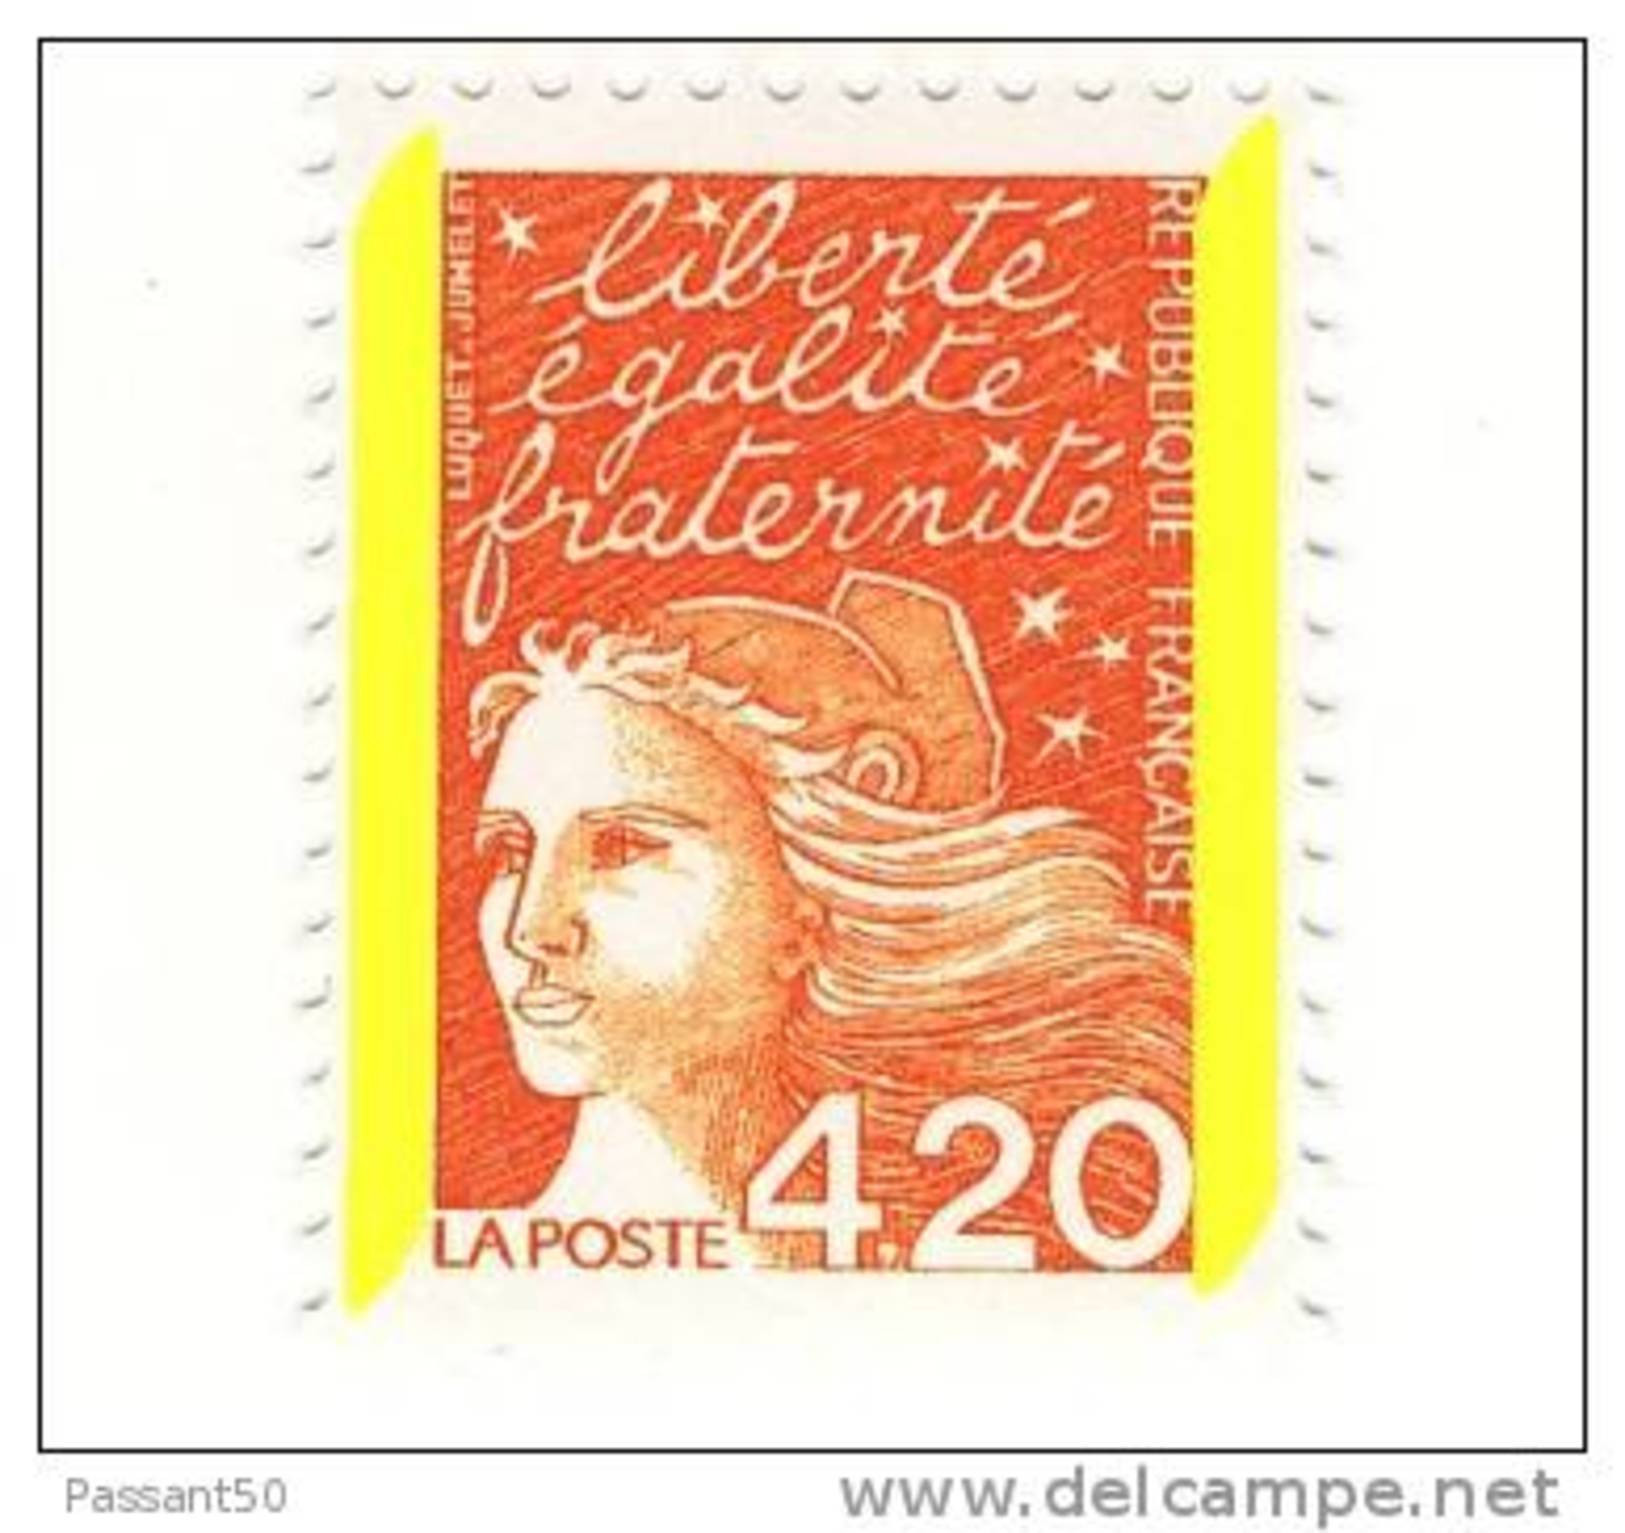 Luquet 4fr20 Orange YT 3094 TYPE II : Deux Bandes Phospho Et Papier LUMI Sous UV. Cote Maury N° 3079 II : 8 €. - Unused Stamps